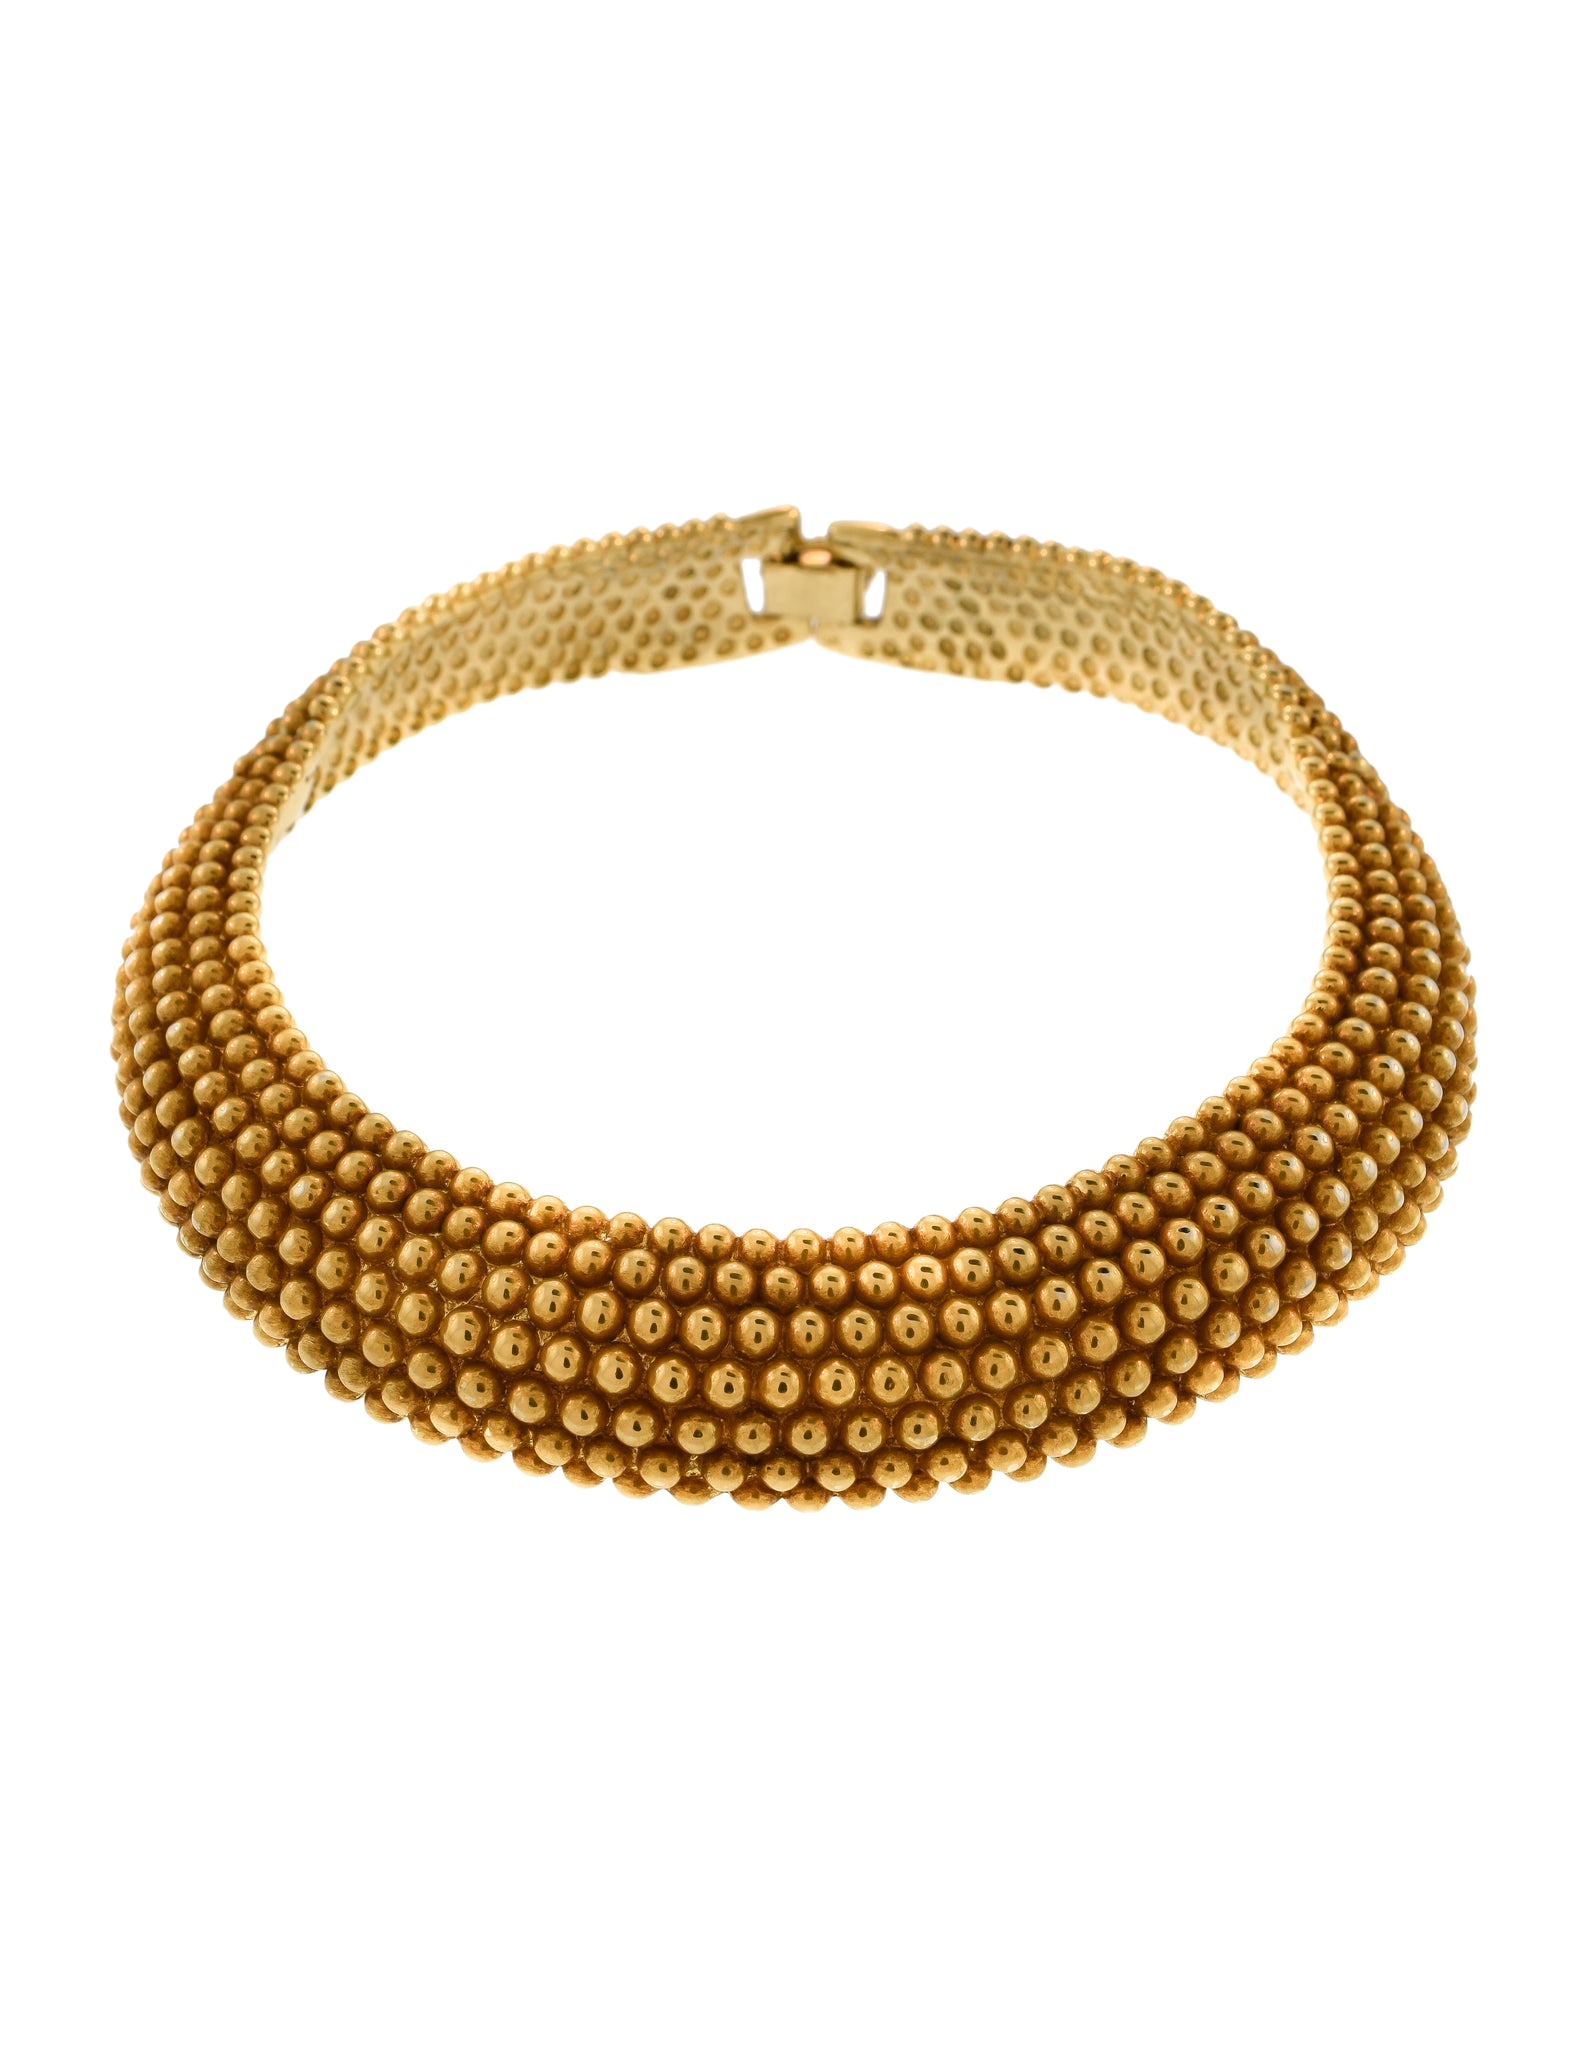 Yves Saint Laurent Vintage Gold Textured Choker Collar Necklace